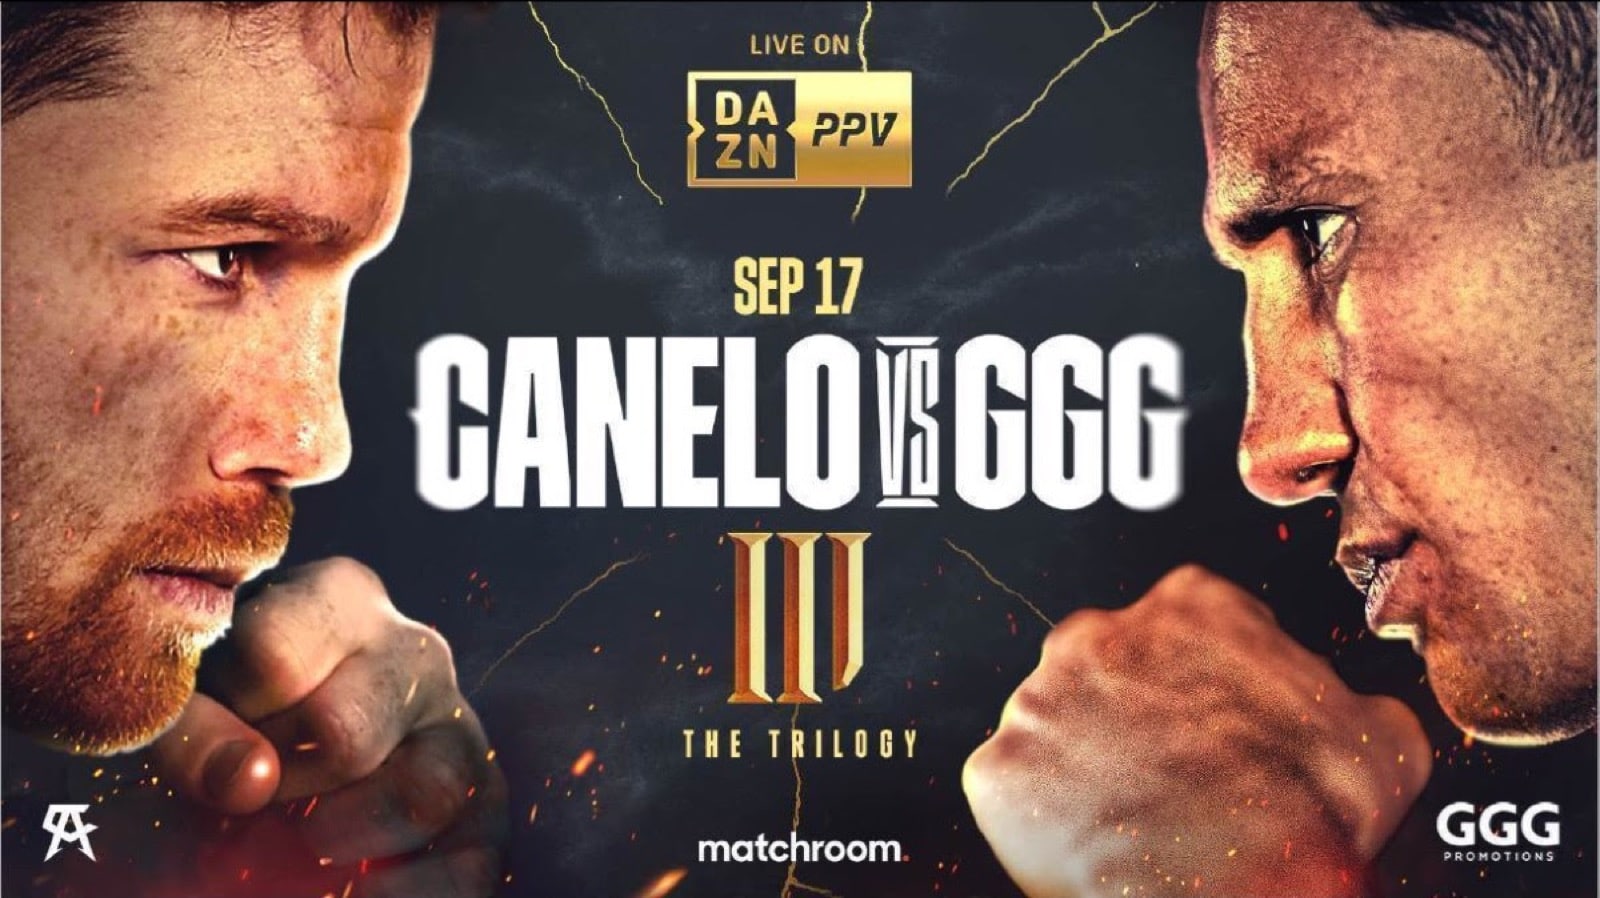 Image: Canelo Alvarez vs. Gennady Golovkin II mini press tour in LA & NY next week